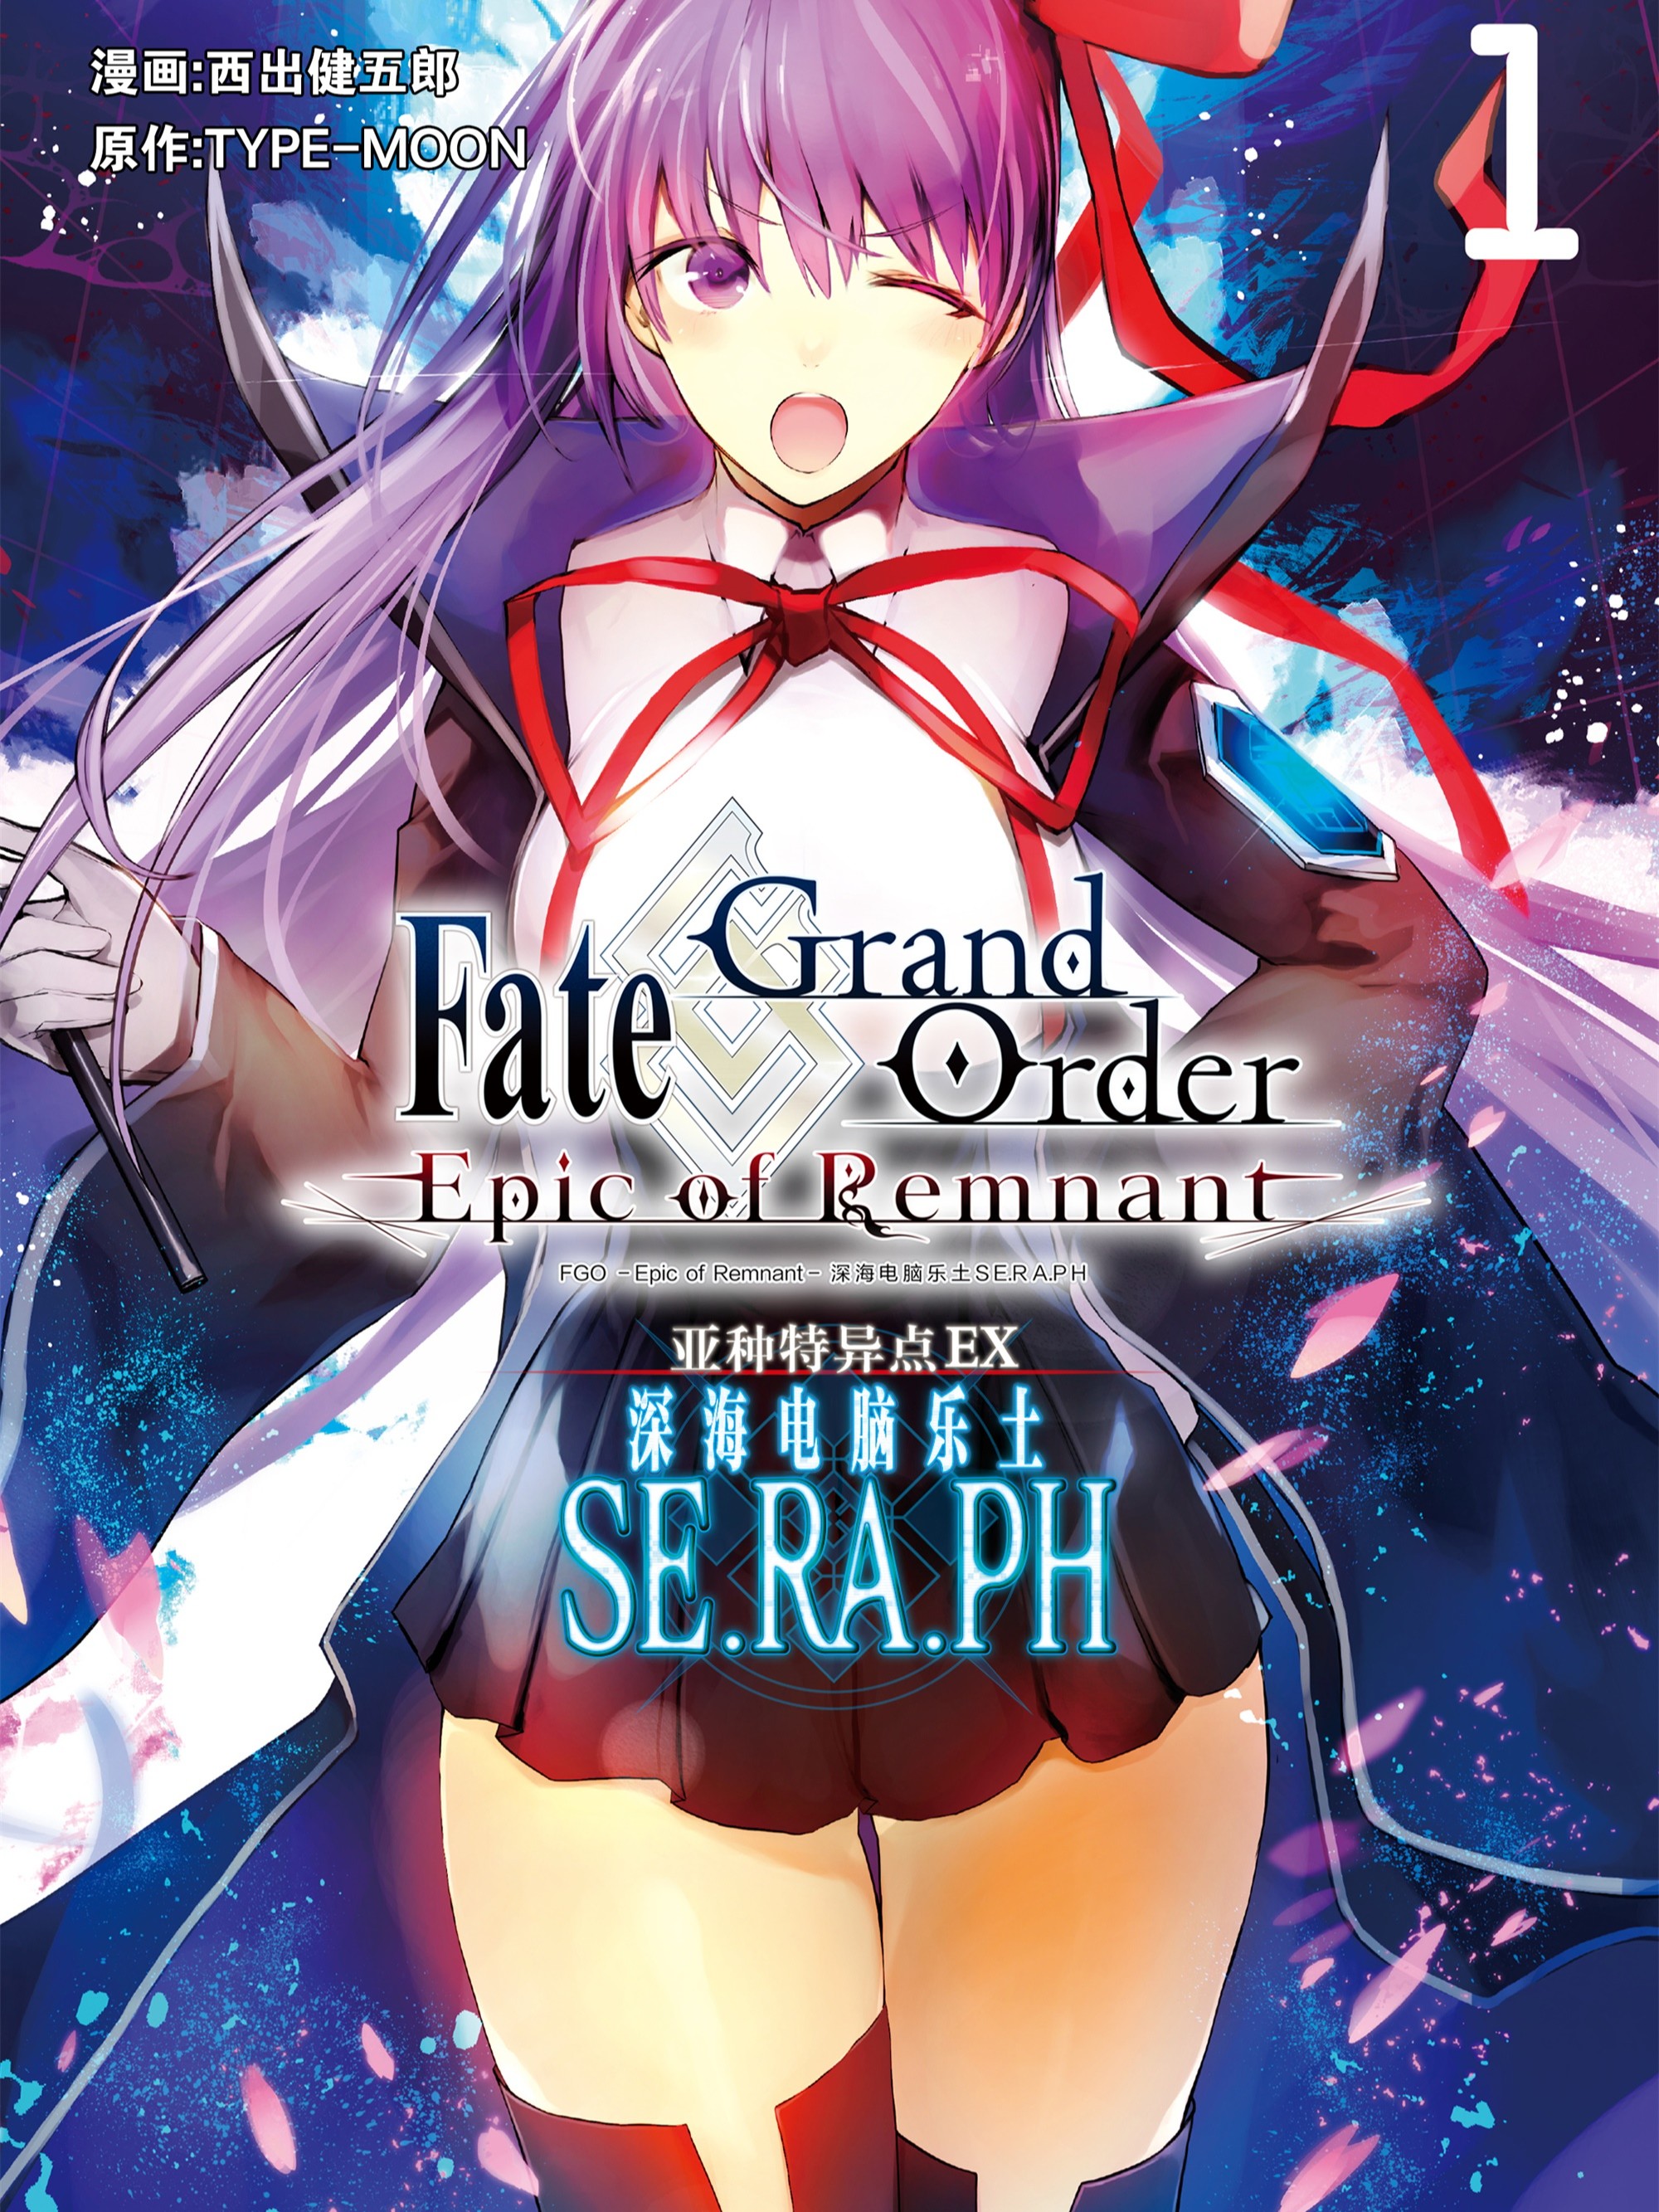 Fate/GrandOrder-EpicofRemnant-亚种特异点EX深海电脑乐土SE.RA.PH